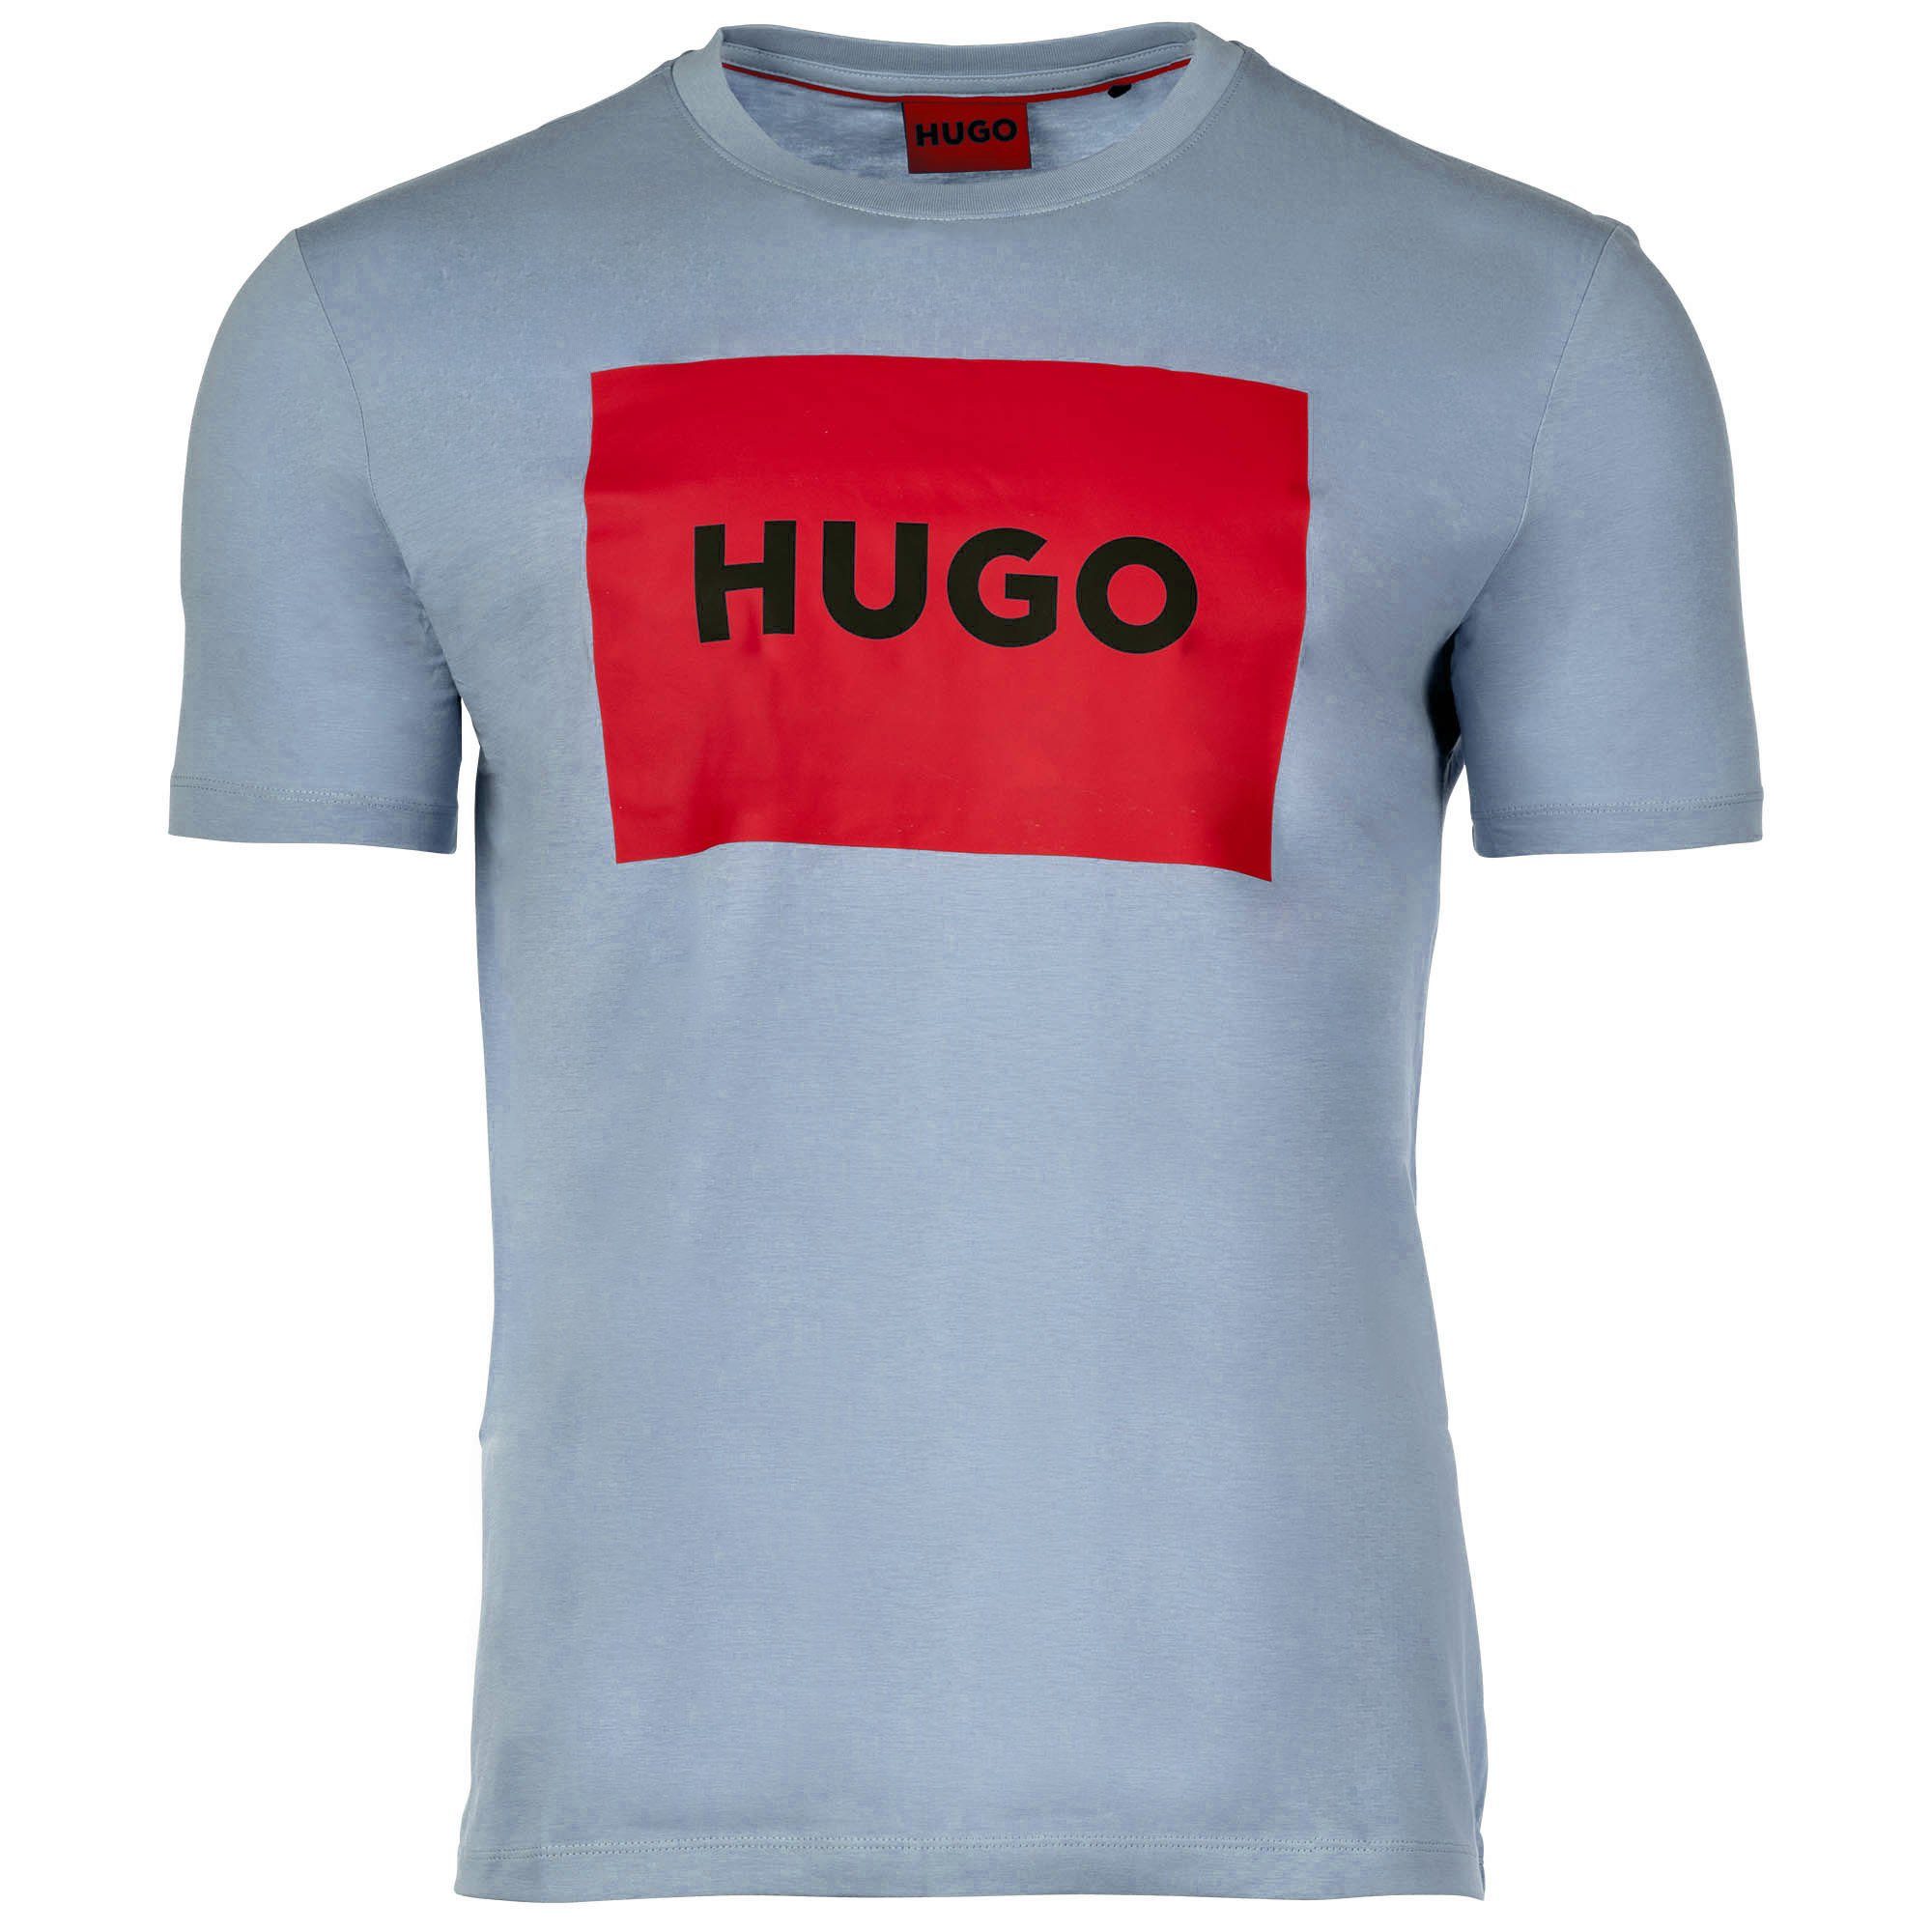 HUGO T-Shirt Herren T-Shirt - Dulive222, Rundhals, Kurzarm